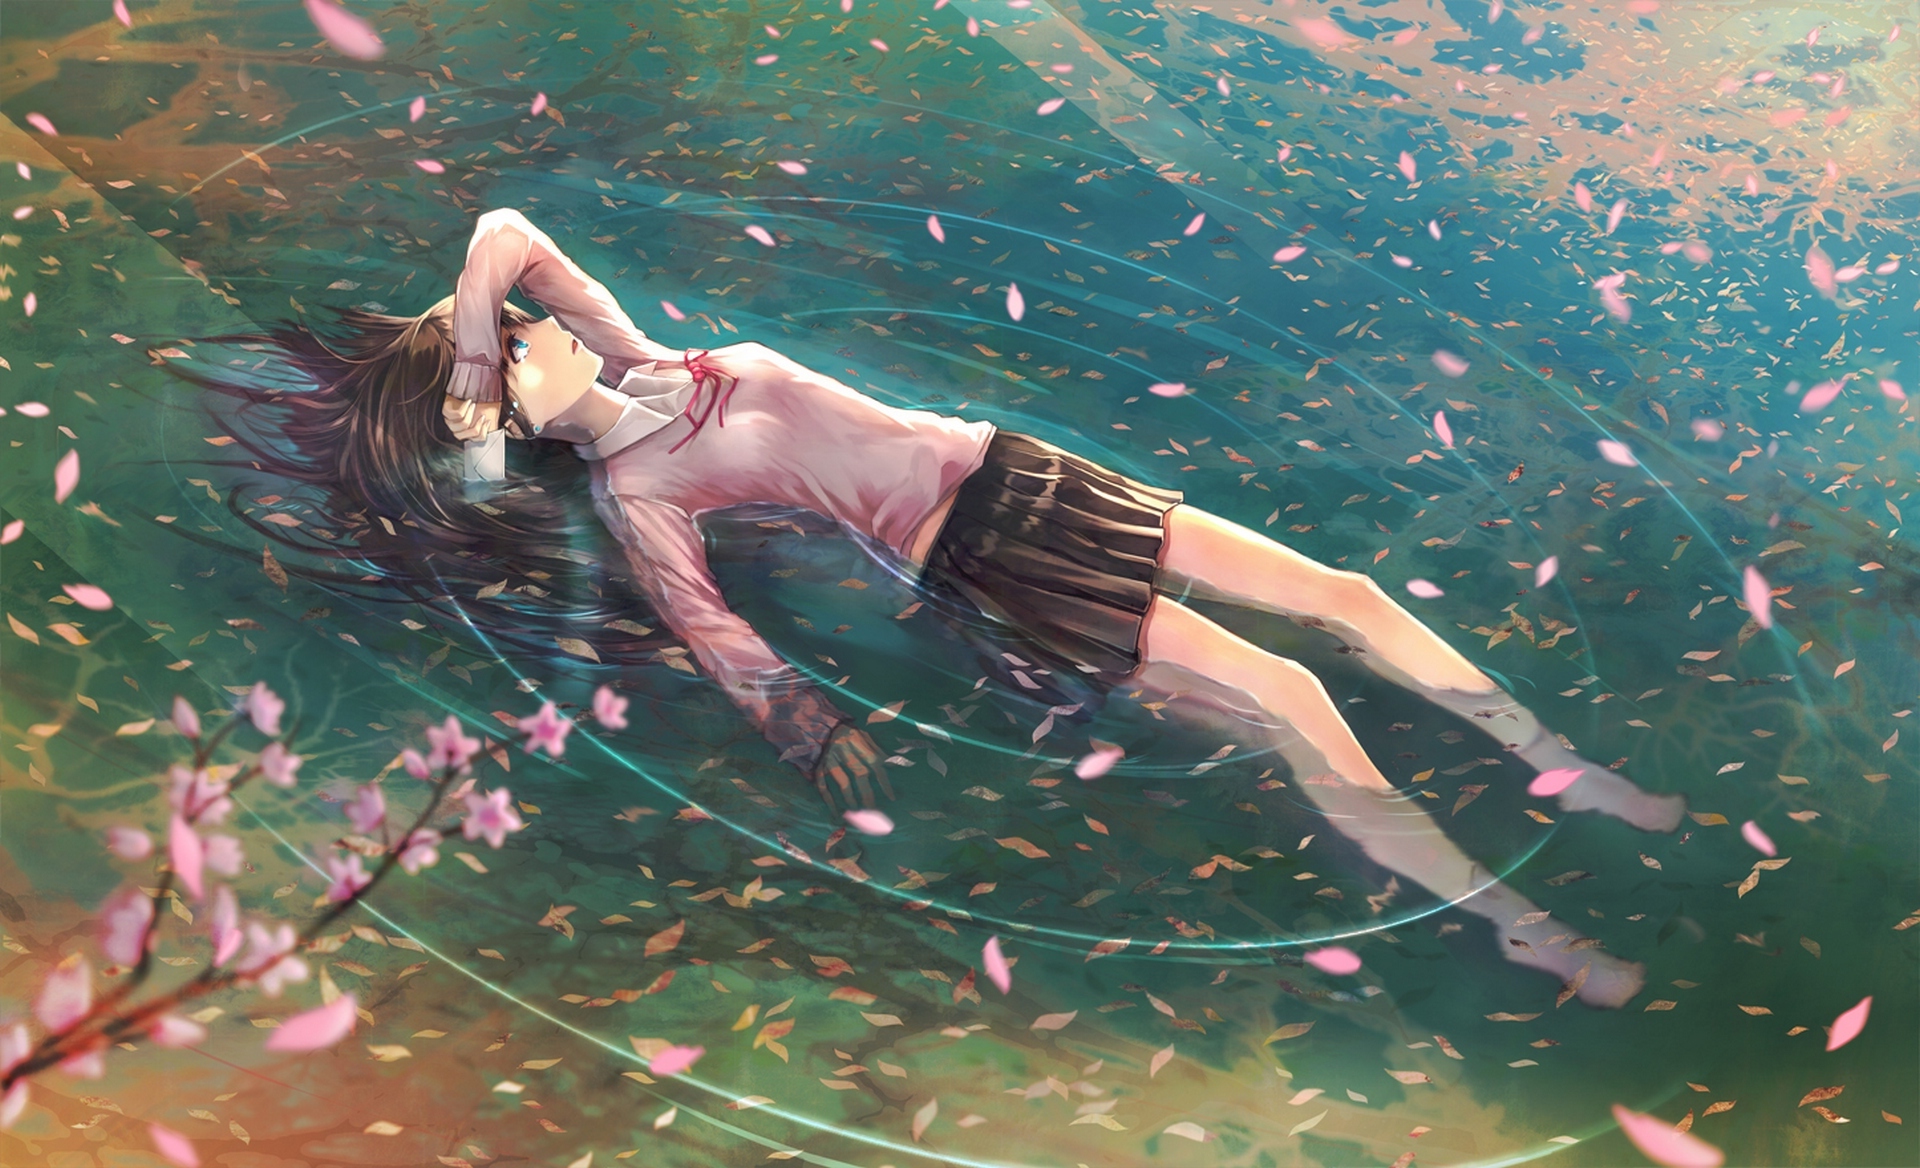 school Uniform, Anime Girls, Floating, Water, Cherry Blossom Wallpaper